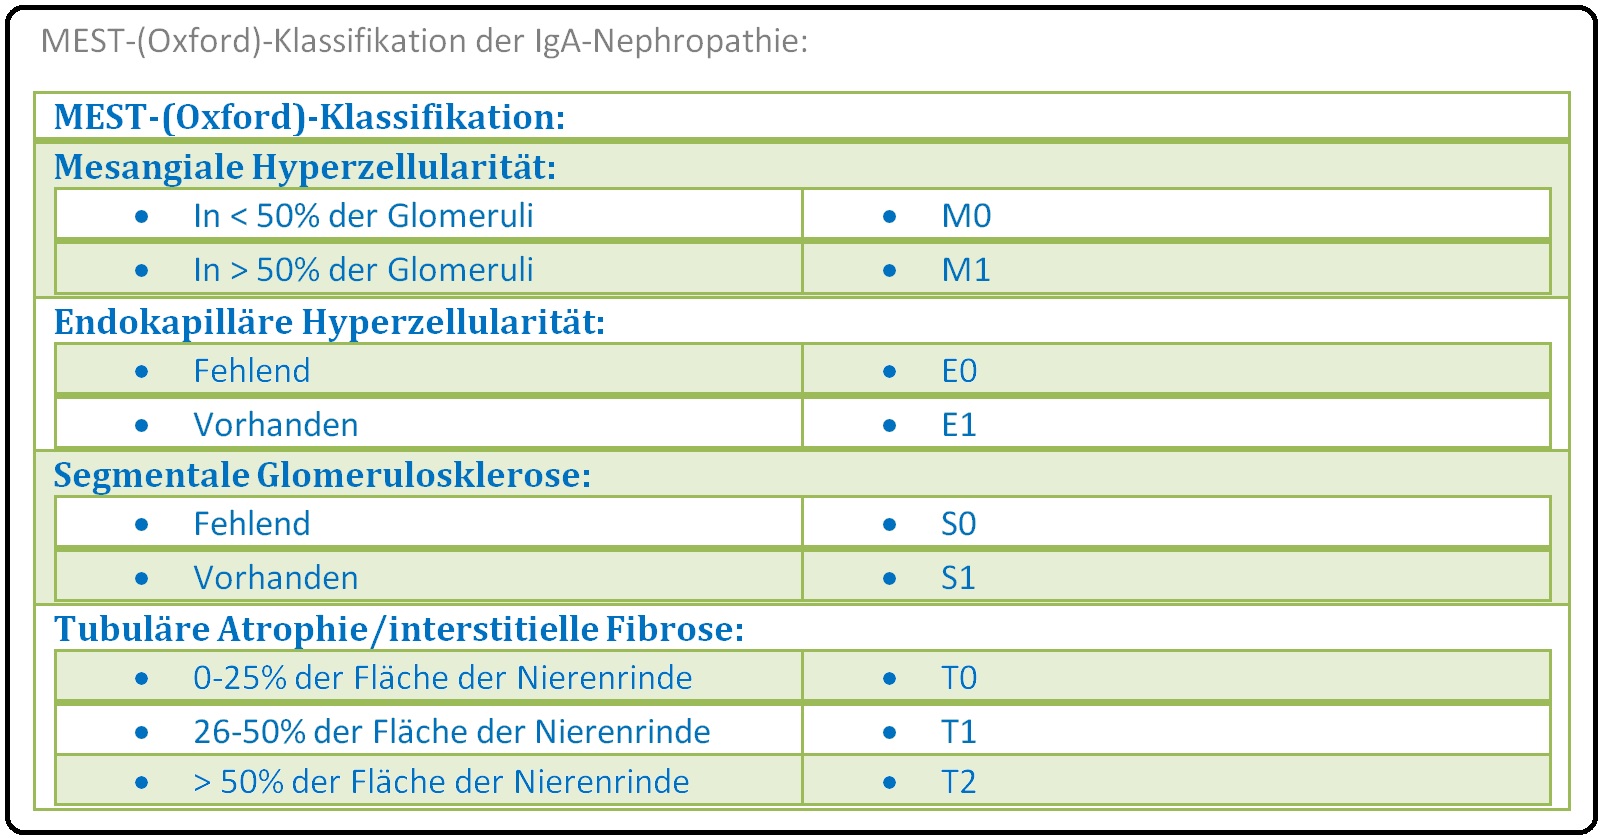 611 MEST Oxford Klassifikation der IgA Nephropathie